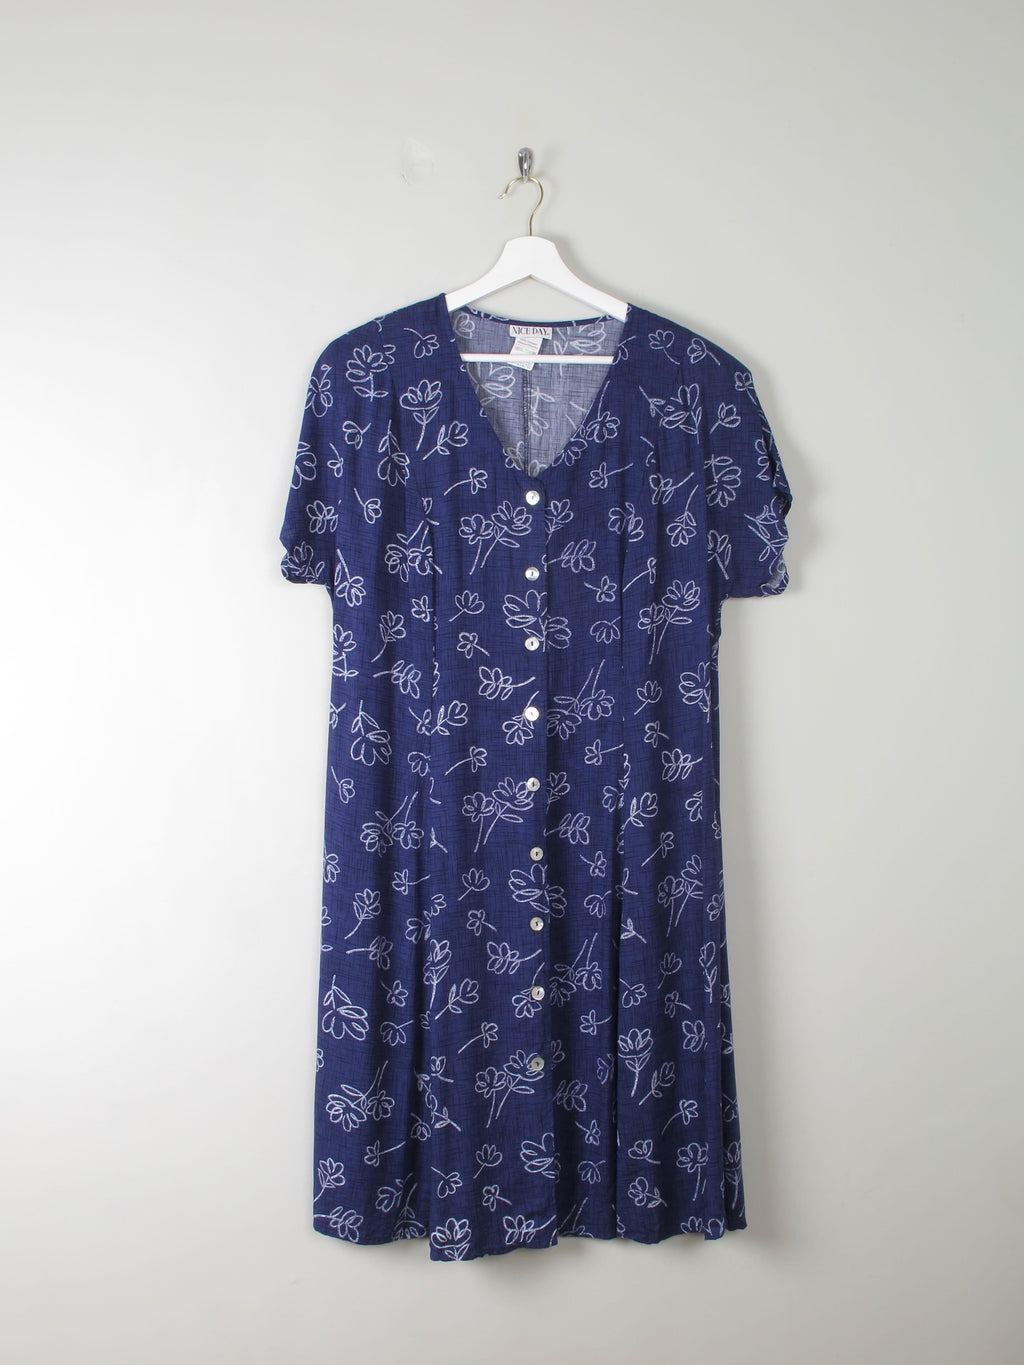 Vintage Navy Printed Dress L/XL - The Harlequin